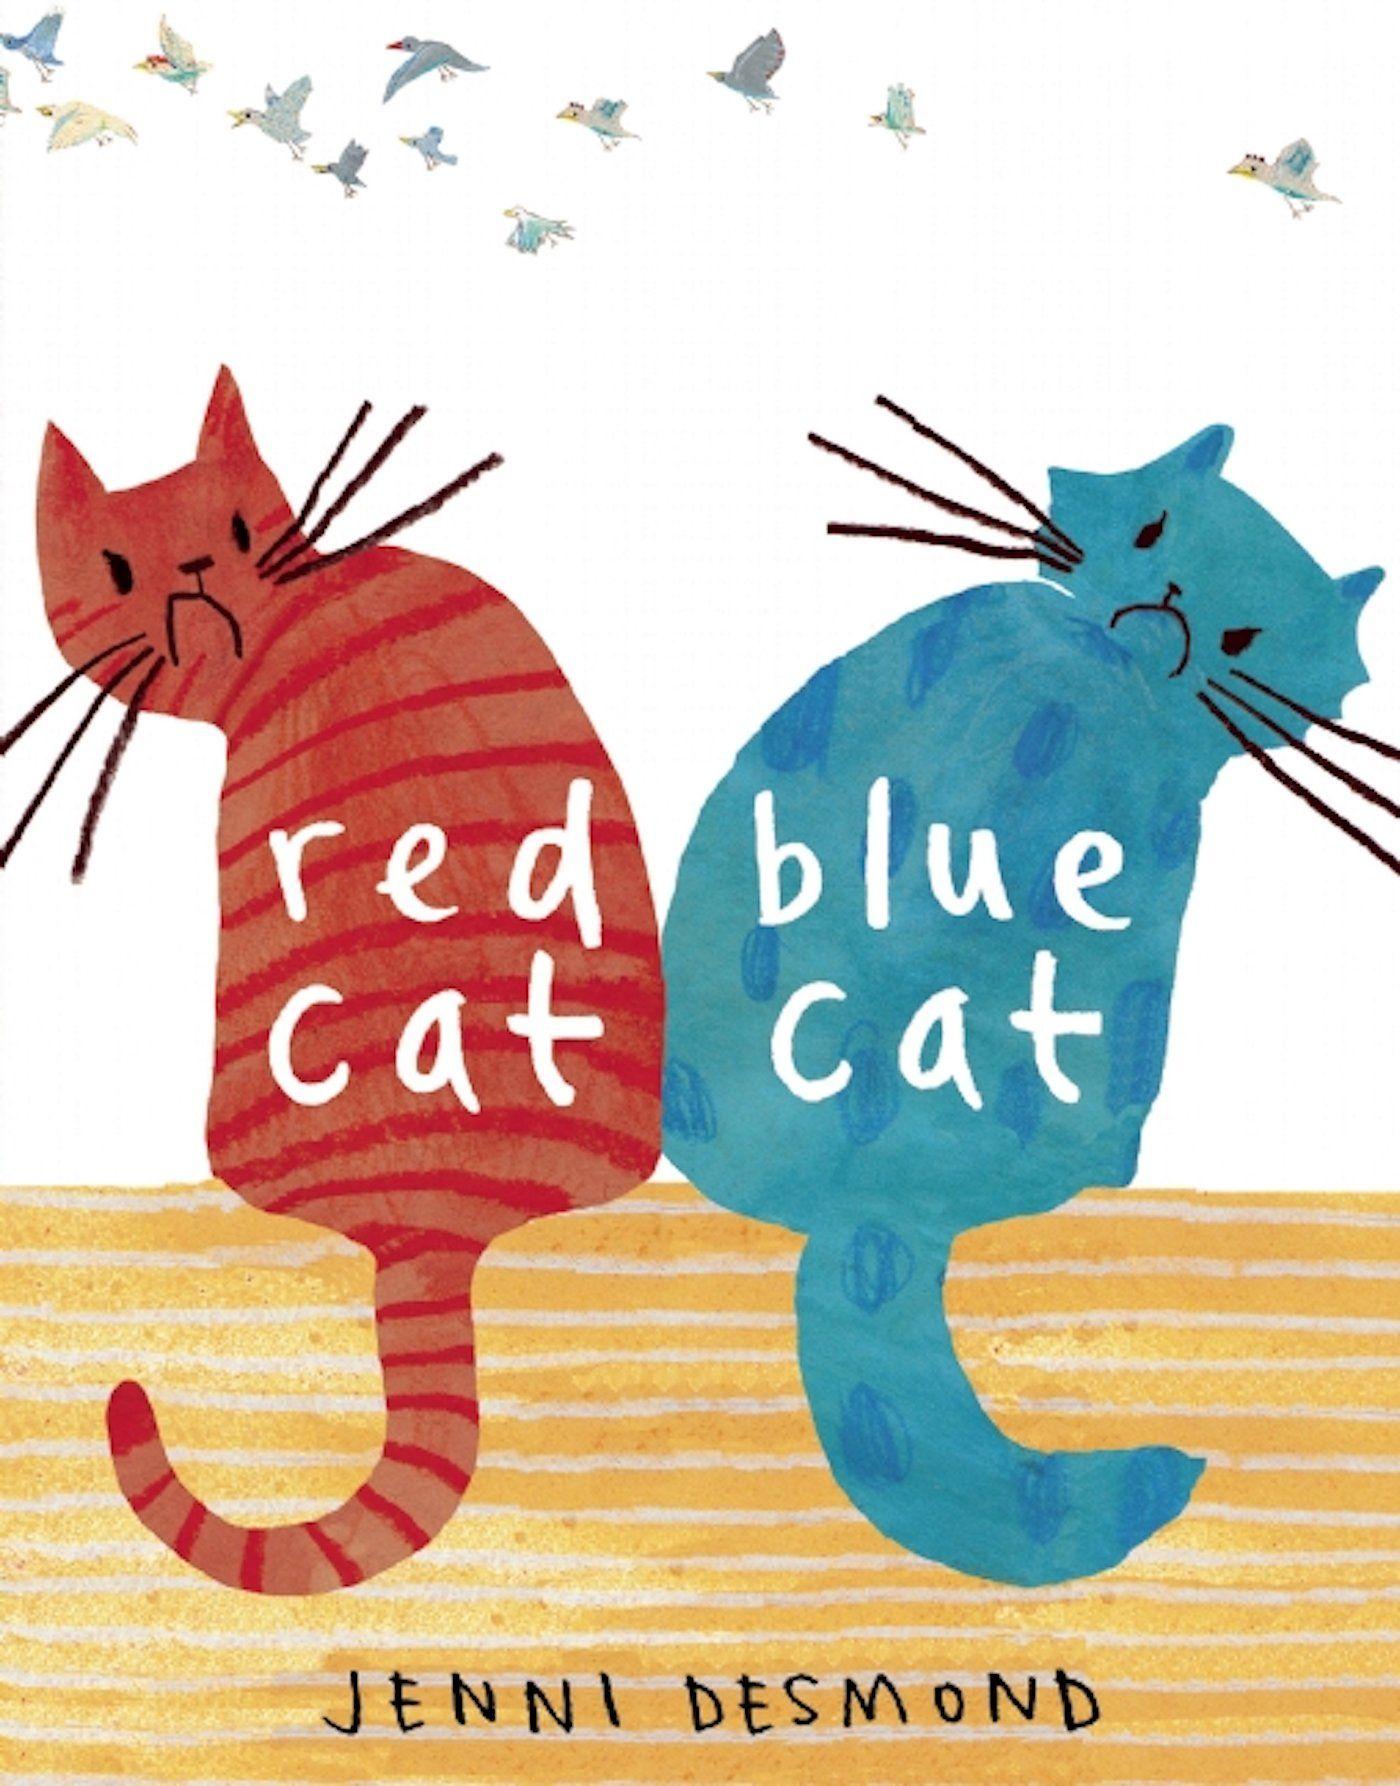 Green and Blue Cat Logo - Red Cat, Blue Cat: Amazon.co.uk: Jenni Desmond: Books